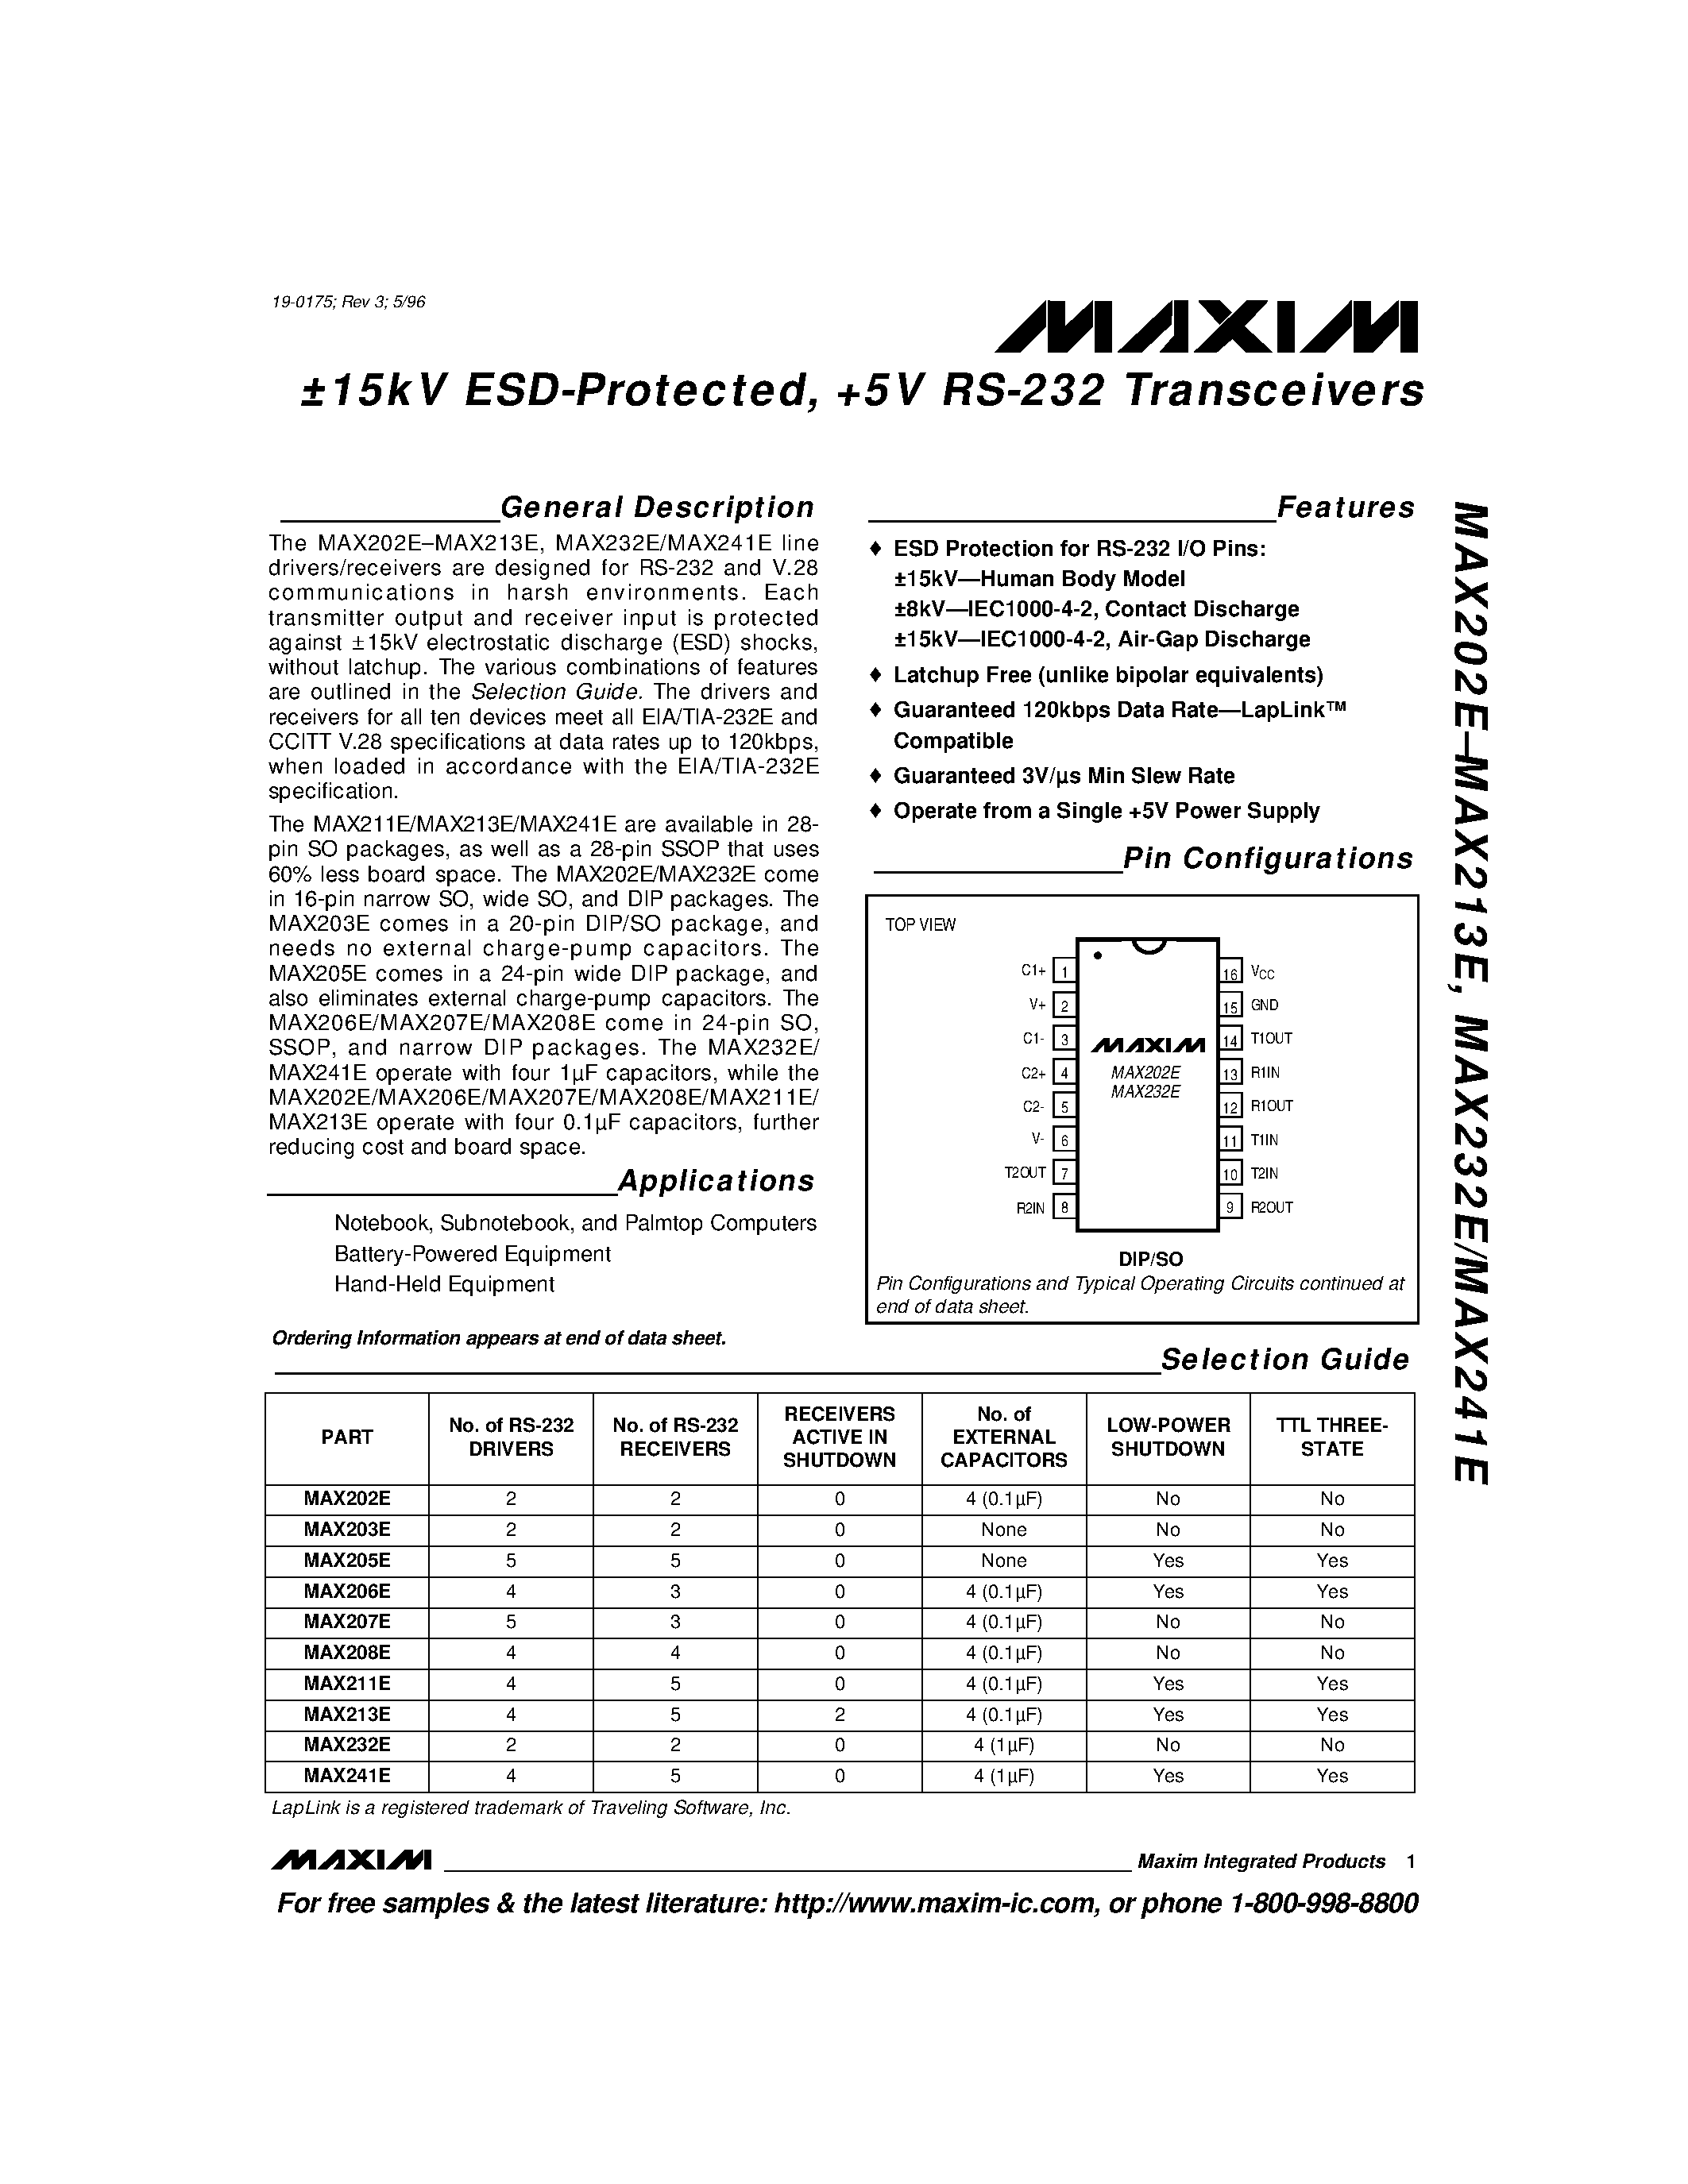 Datasheet MAX232 - DUAL EIA-232 DRIVER/RECEIVER page 1